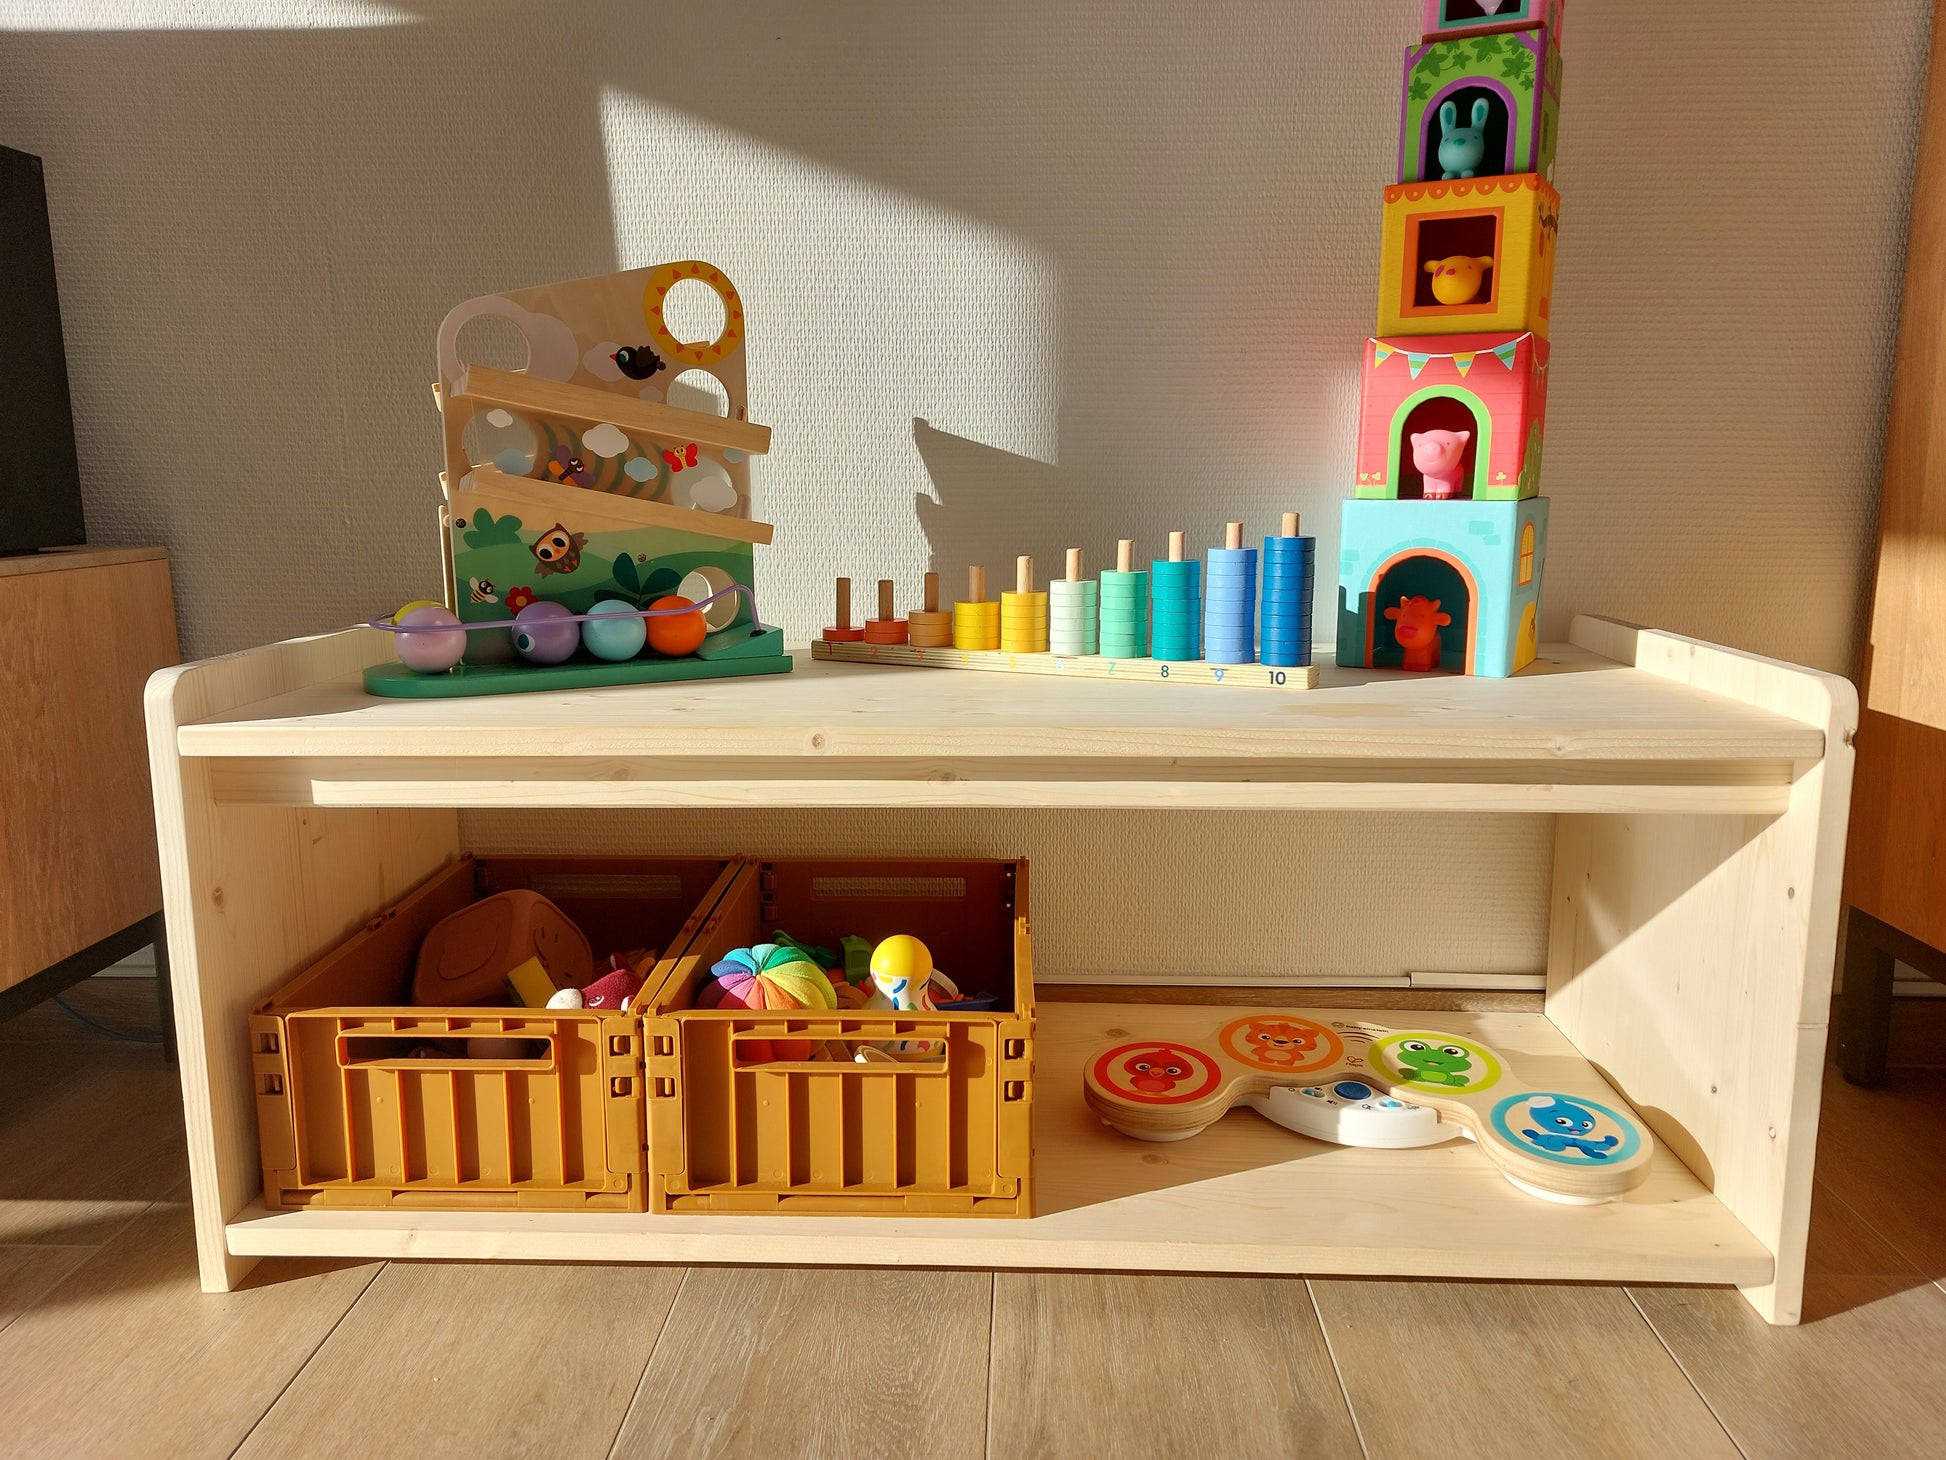 Baby Toys 6 to 12 Months, Baby Blocks Montessori Ecuador